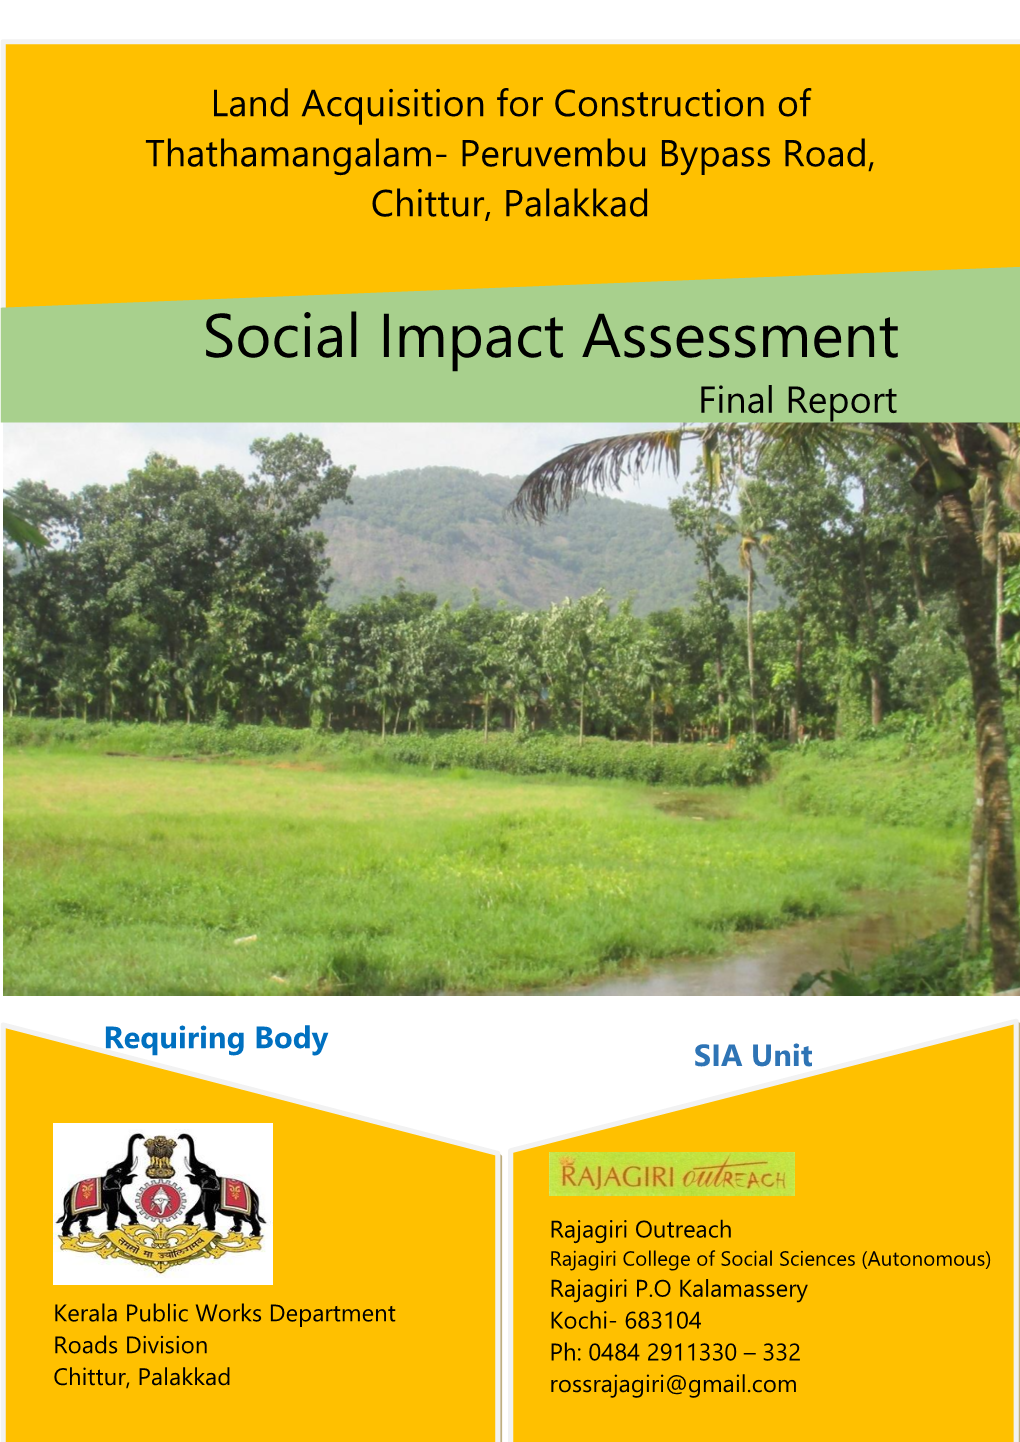 Social Impact Assessment Final Report